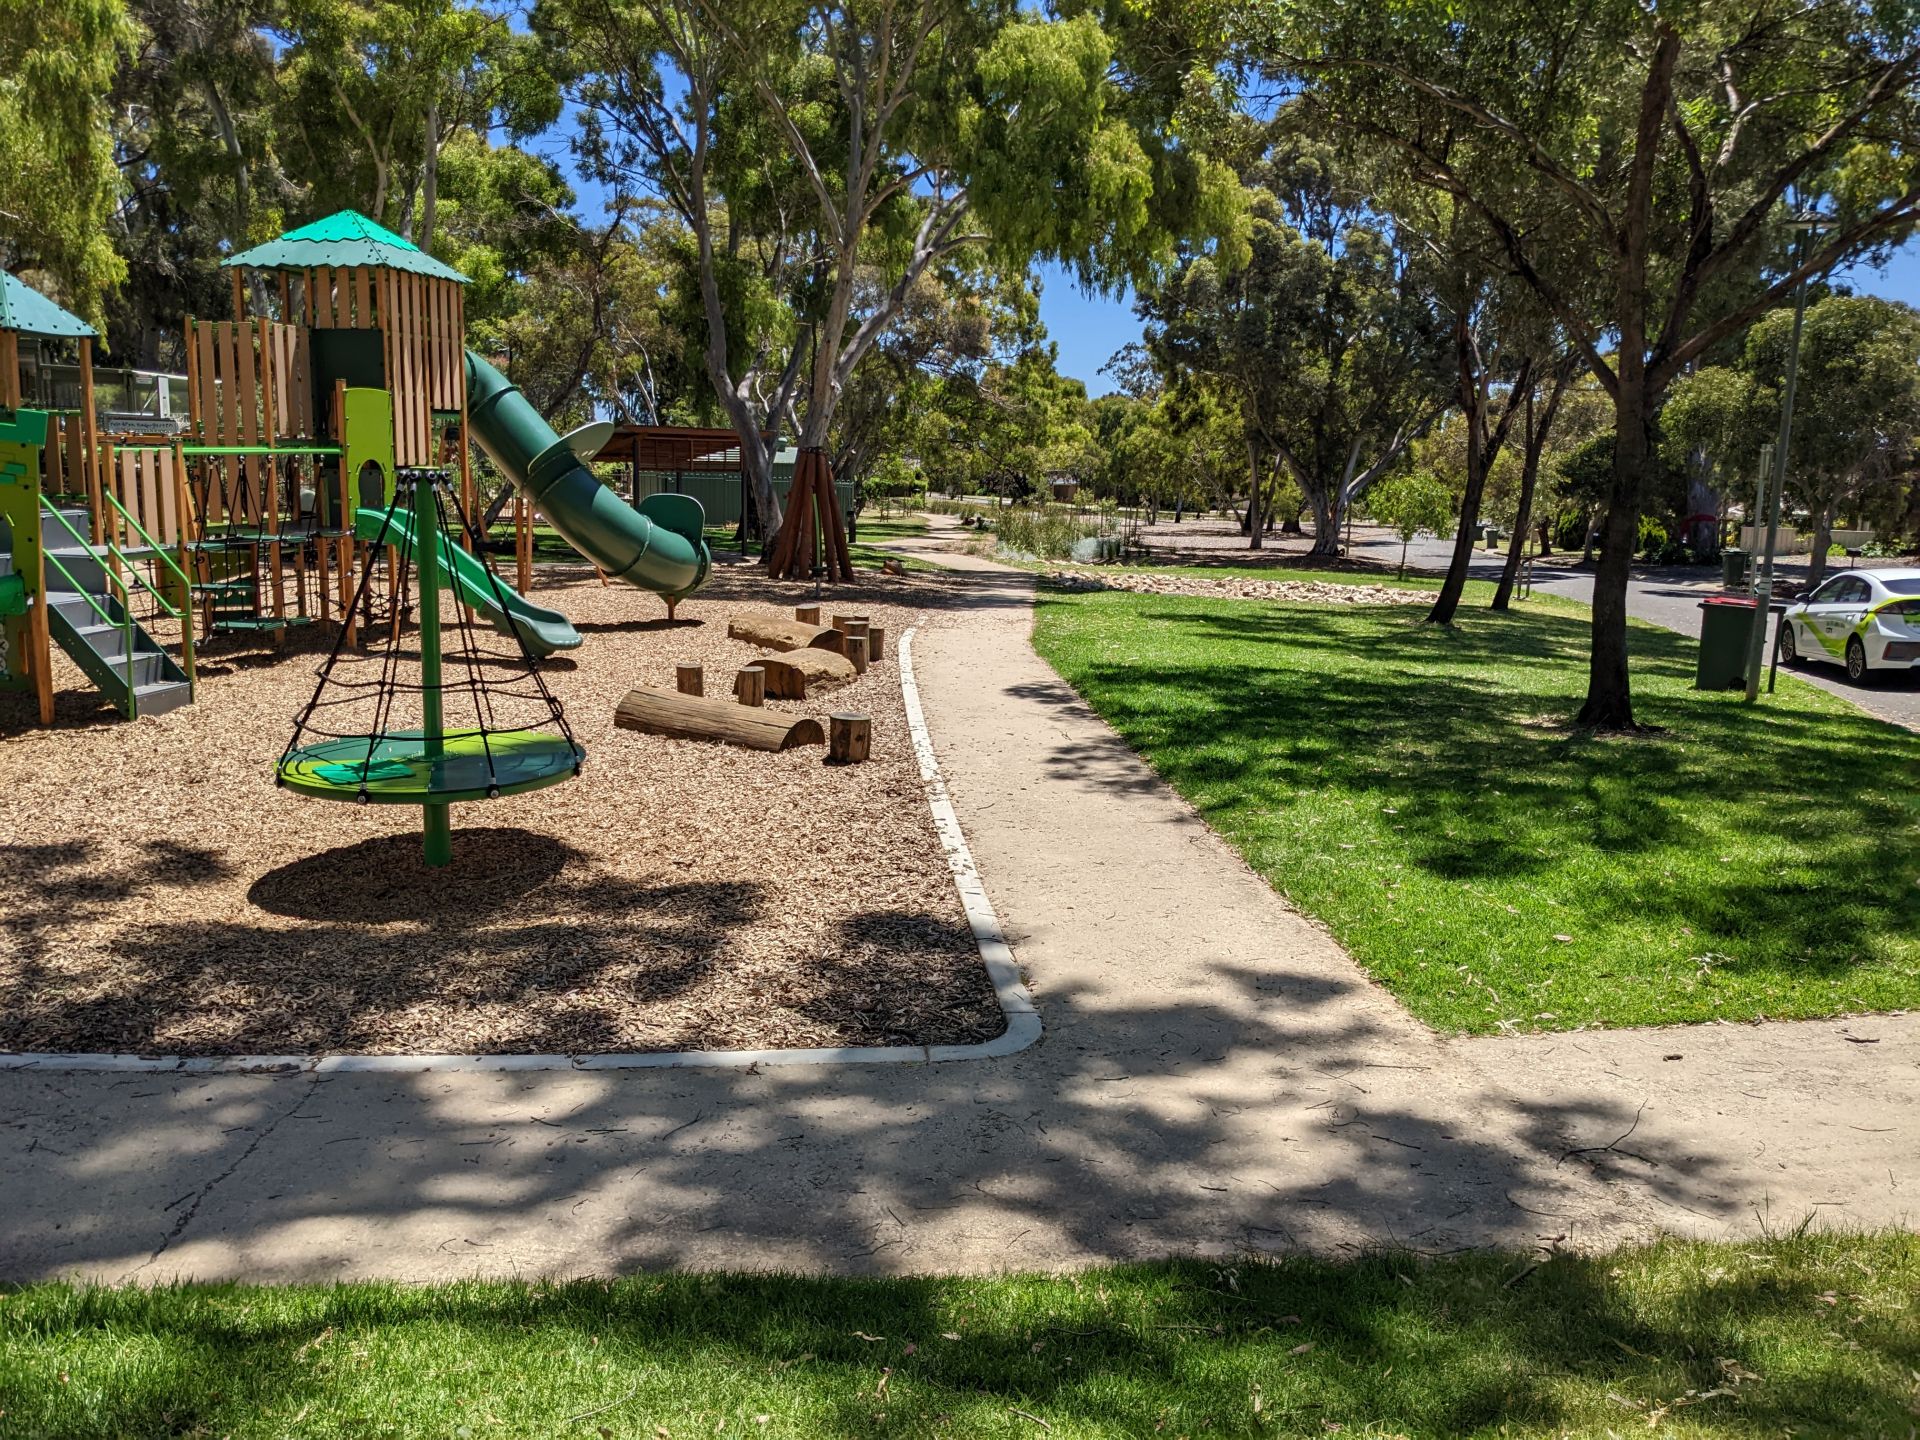 The playground and path at the Pasadena Biodiversity Corridor